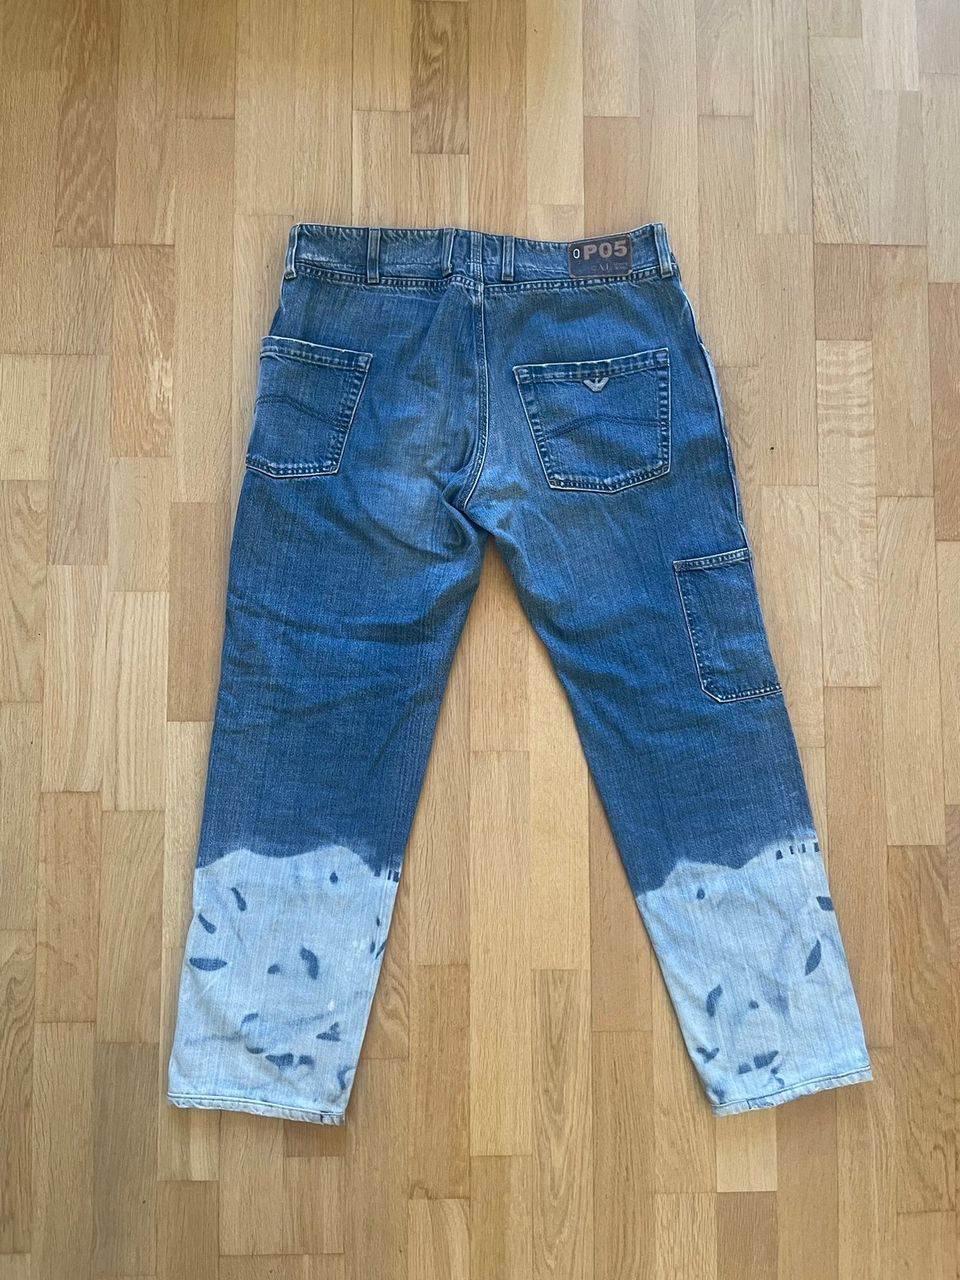 Armani Jeans P05 farkut